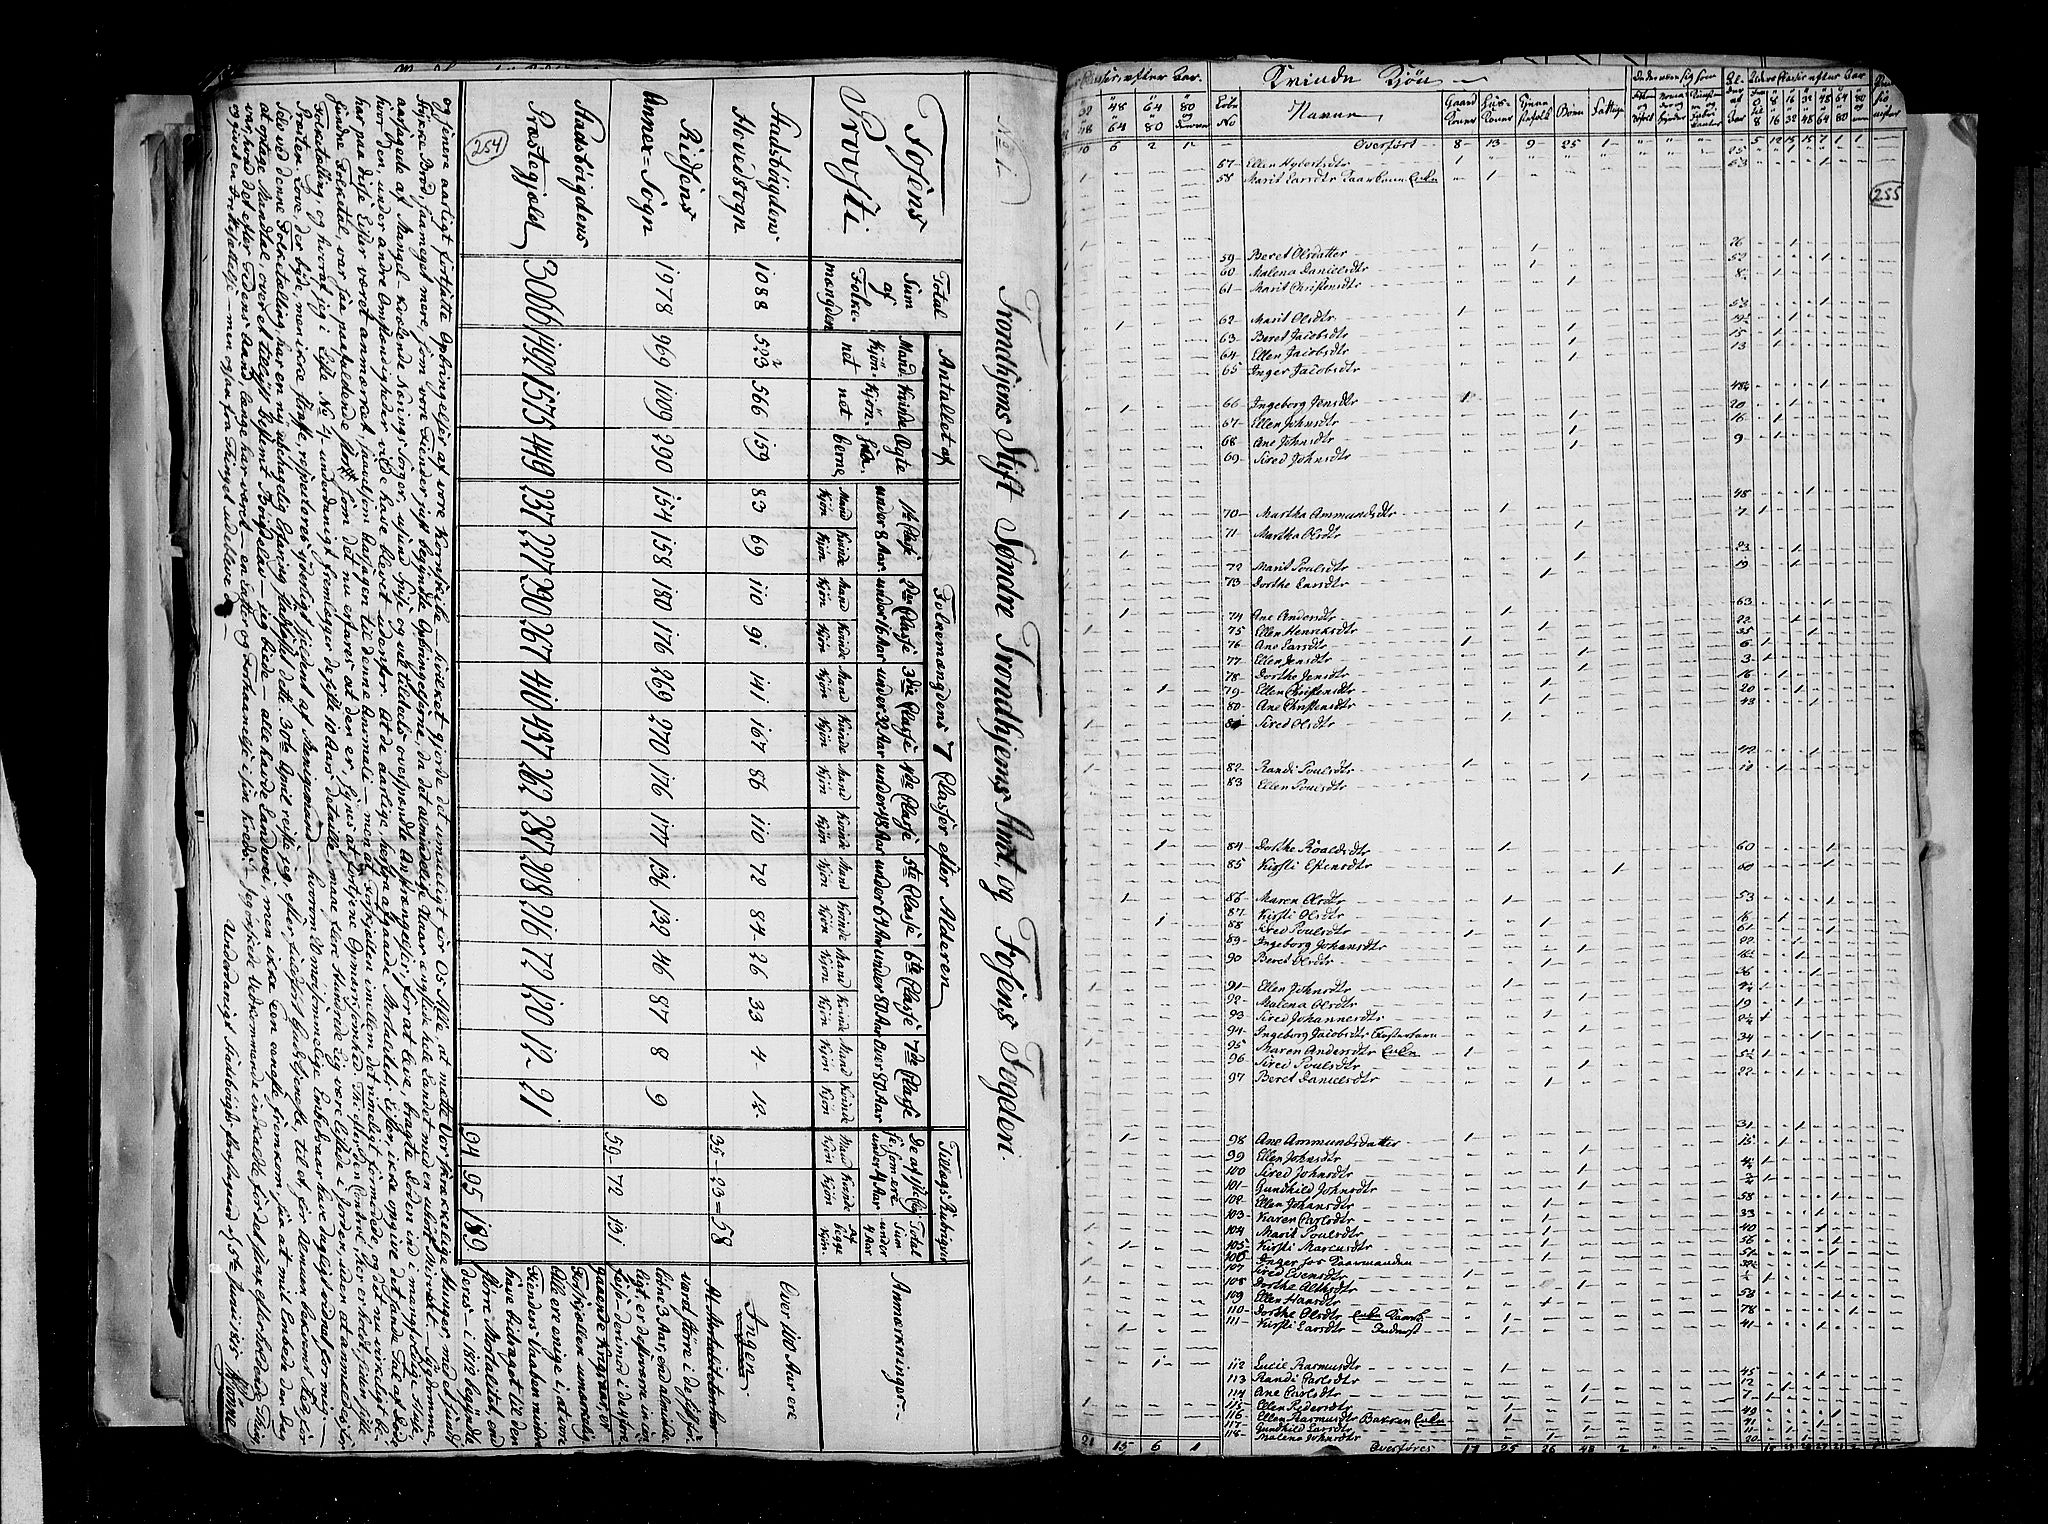 RA, Census 1815, vol. 2: Bergen stift and Trondheim stift, 1815, p. 159